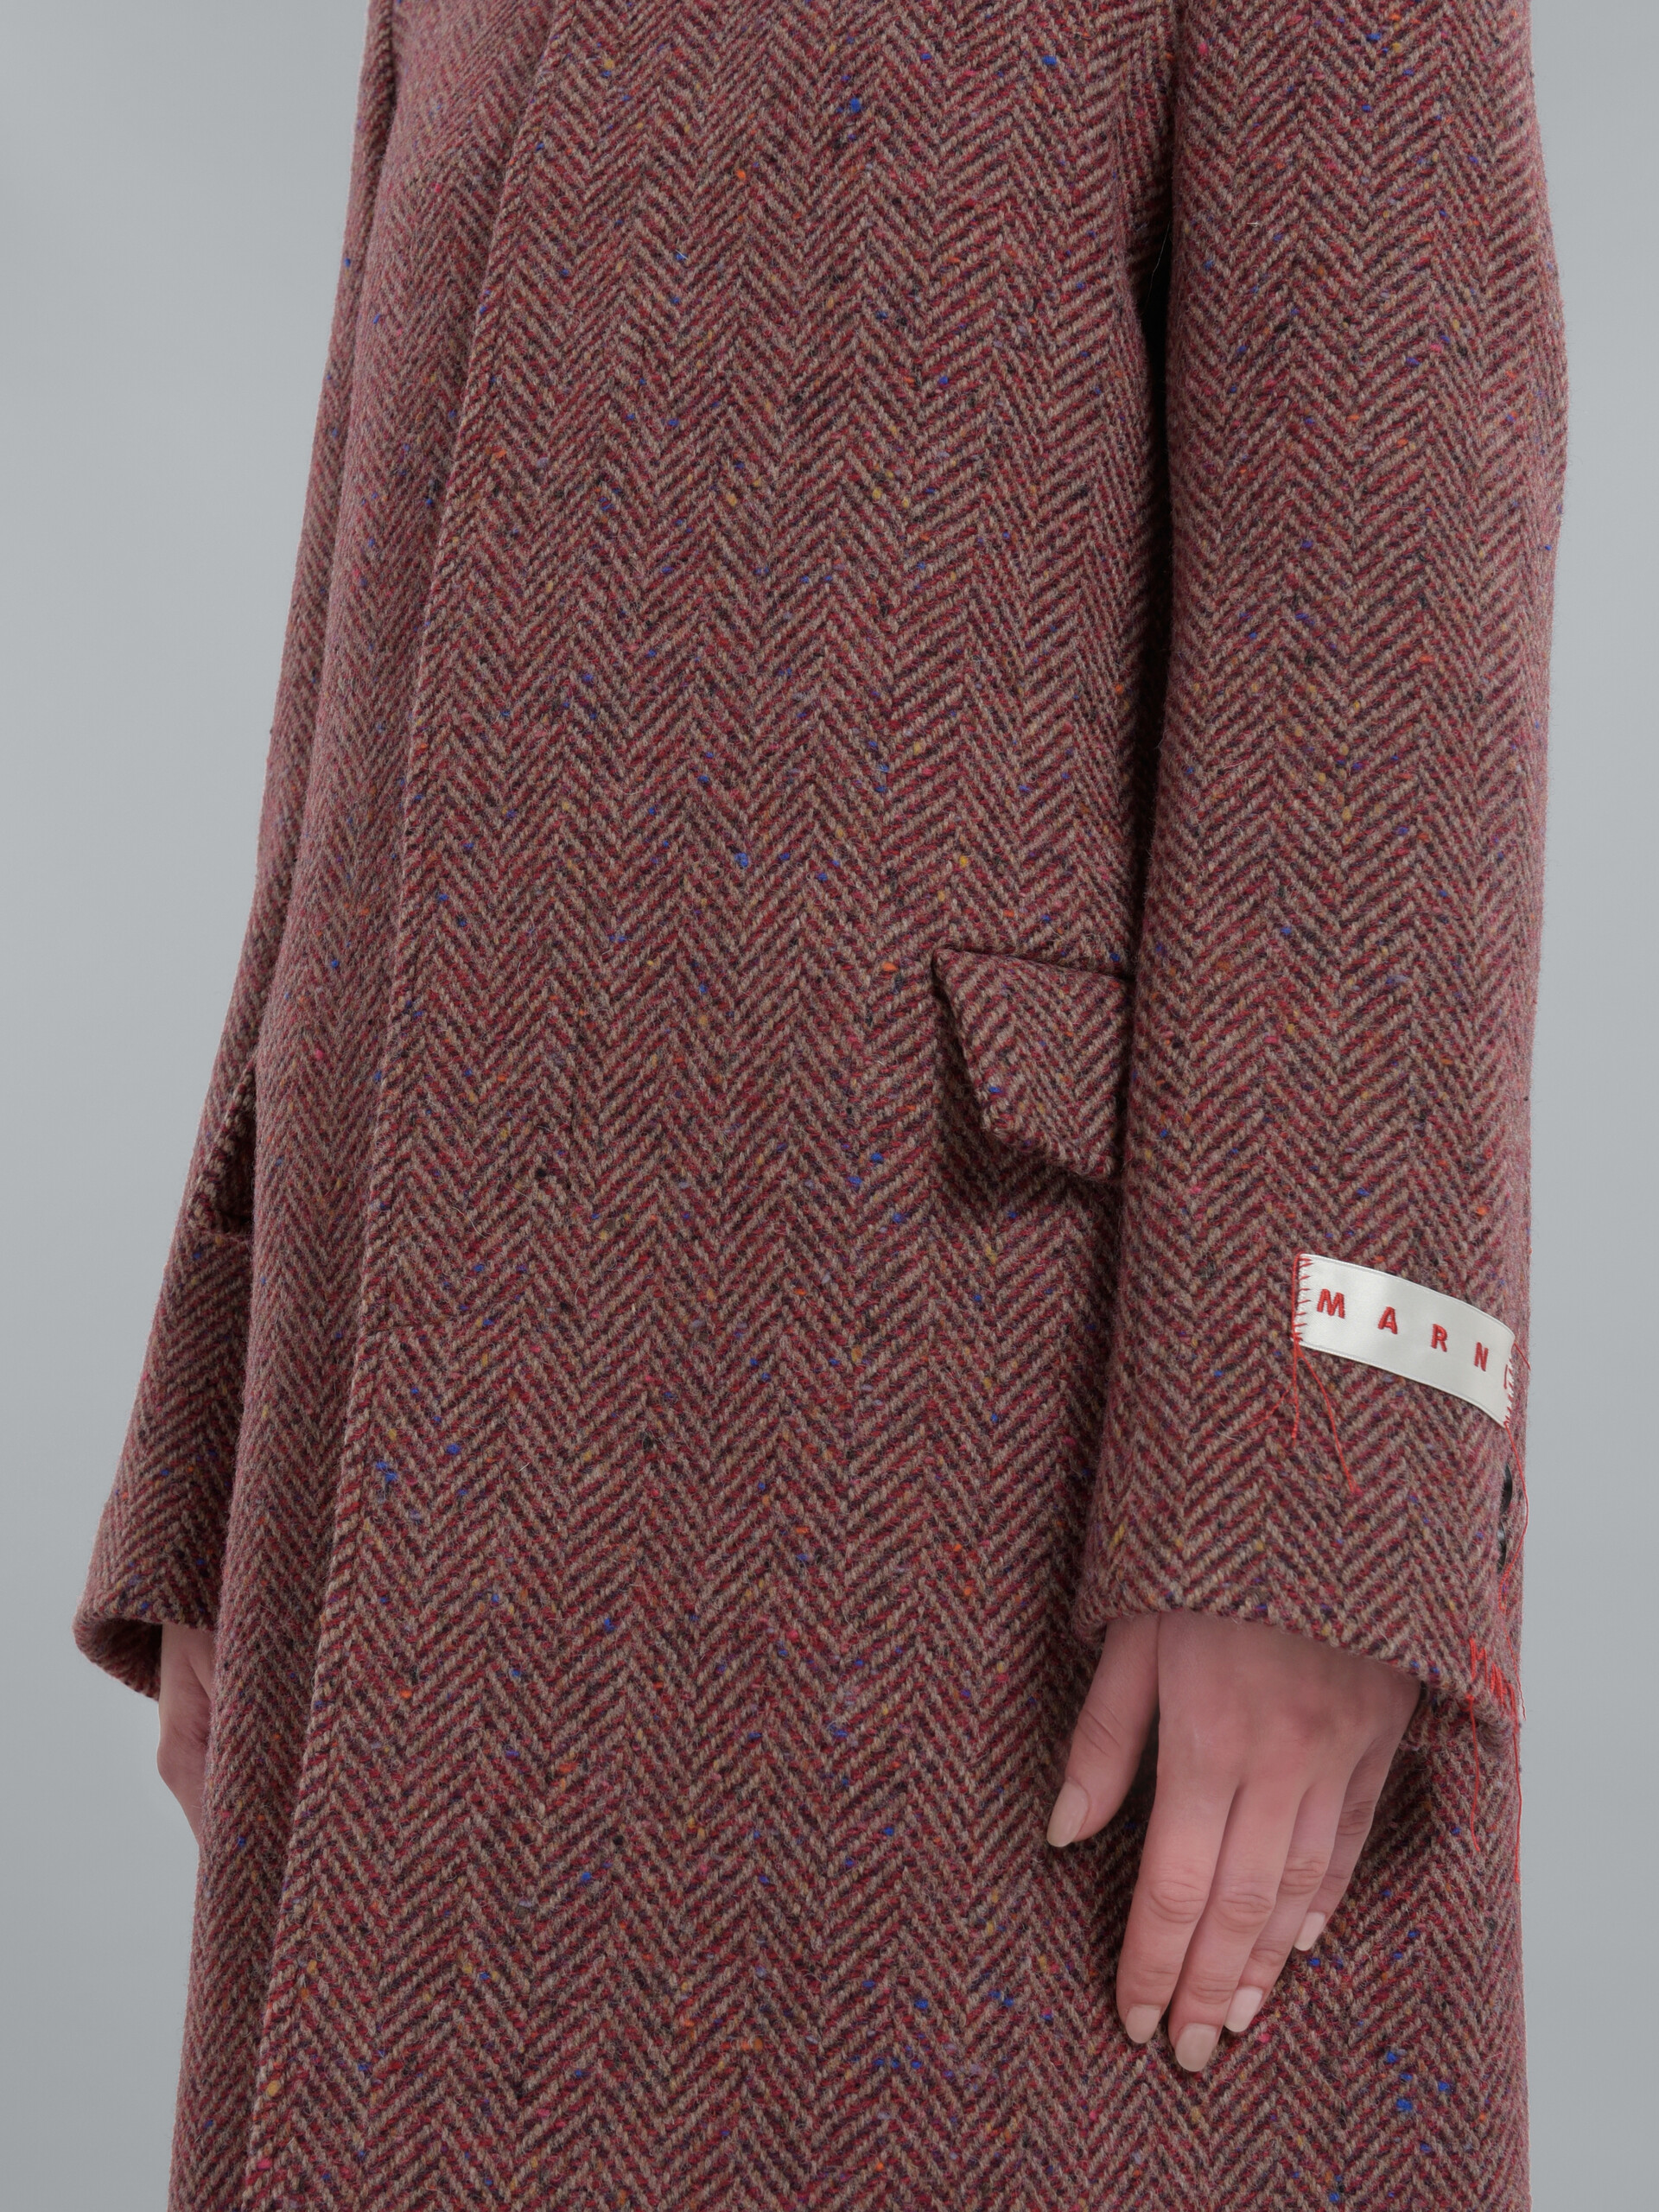 Burgundy chevron wool coat with velvet collar - Coat - Image 5